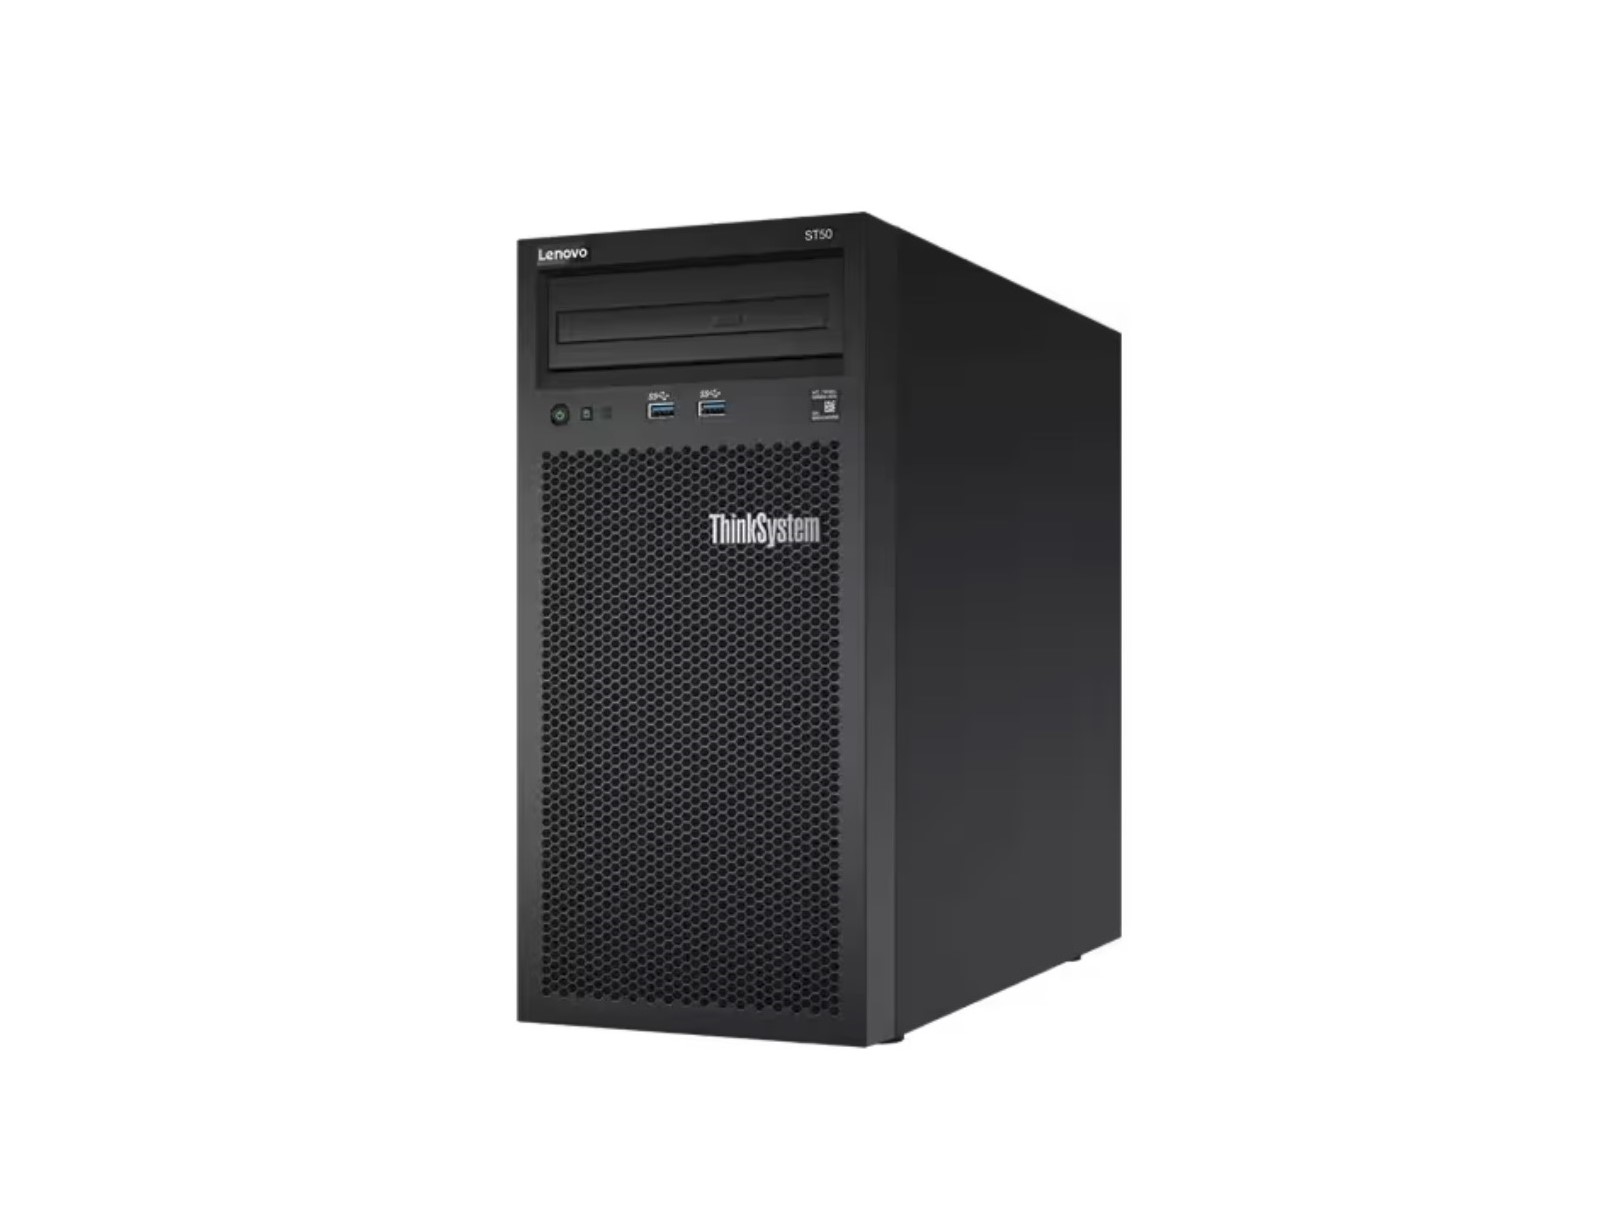 Lenovo ThinkSystem ST50 Tower Server product image